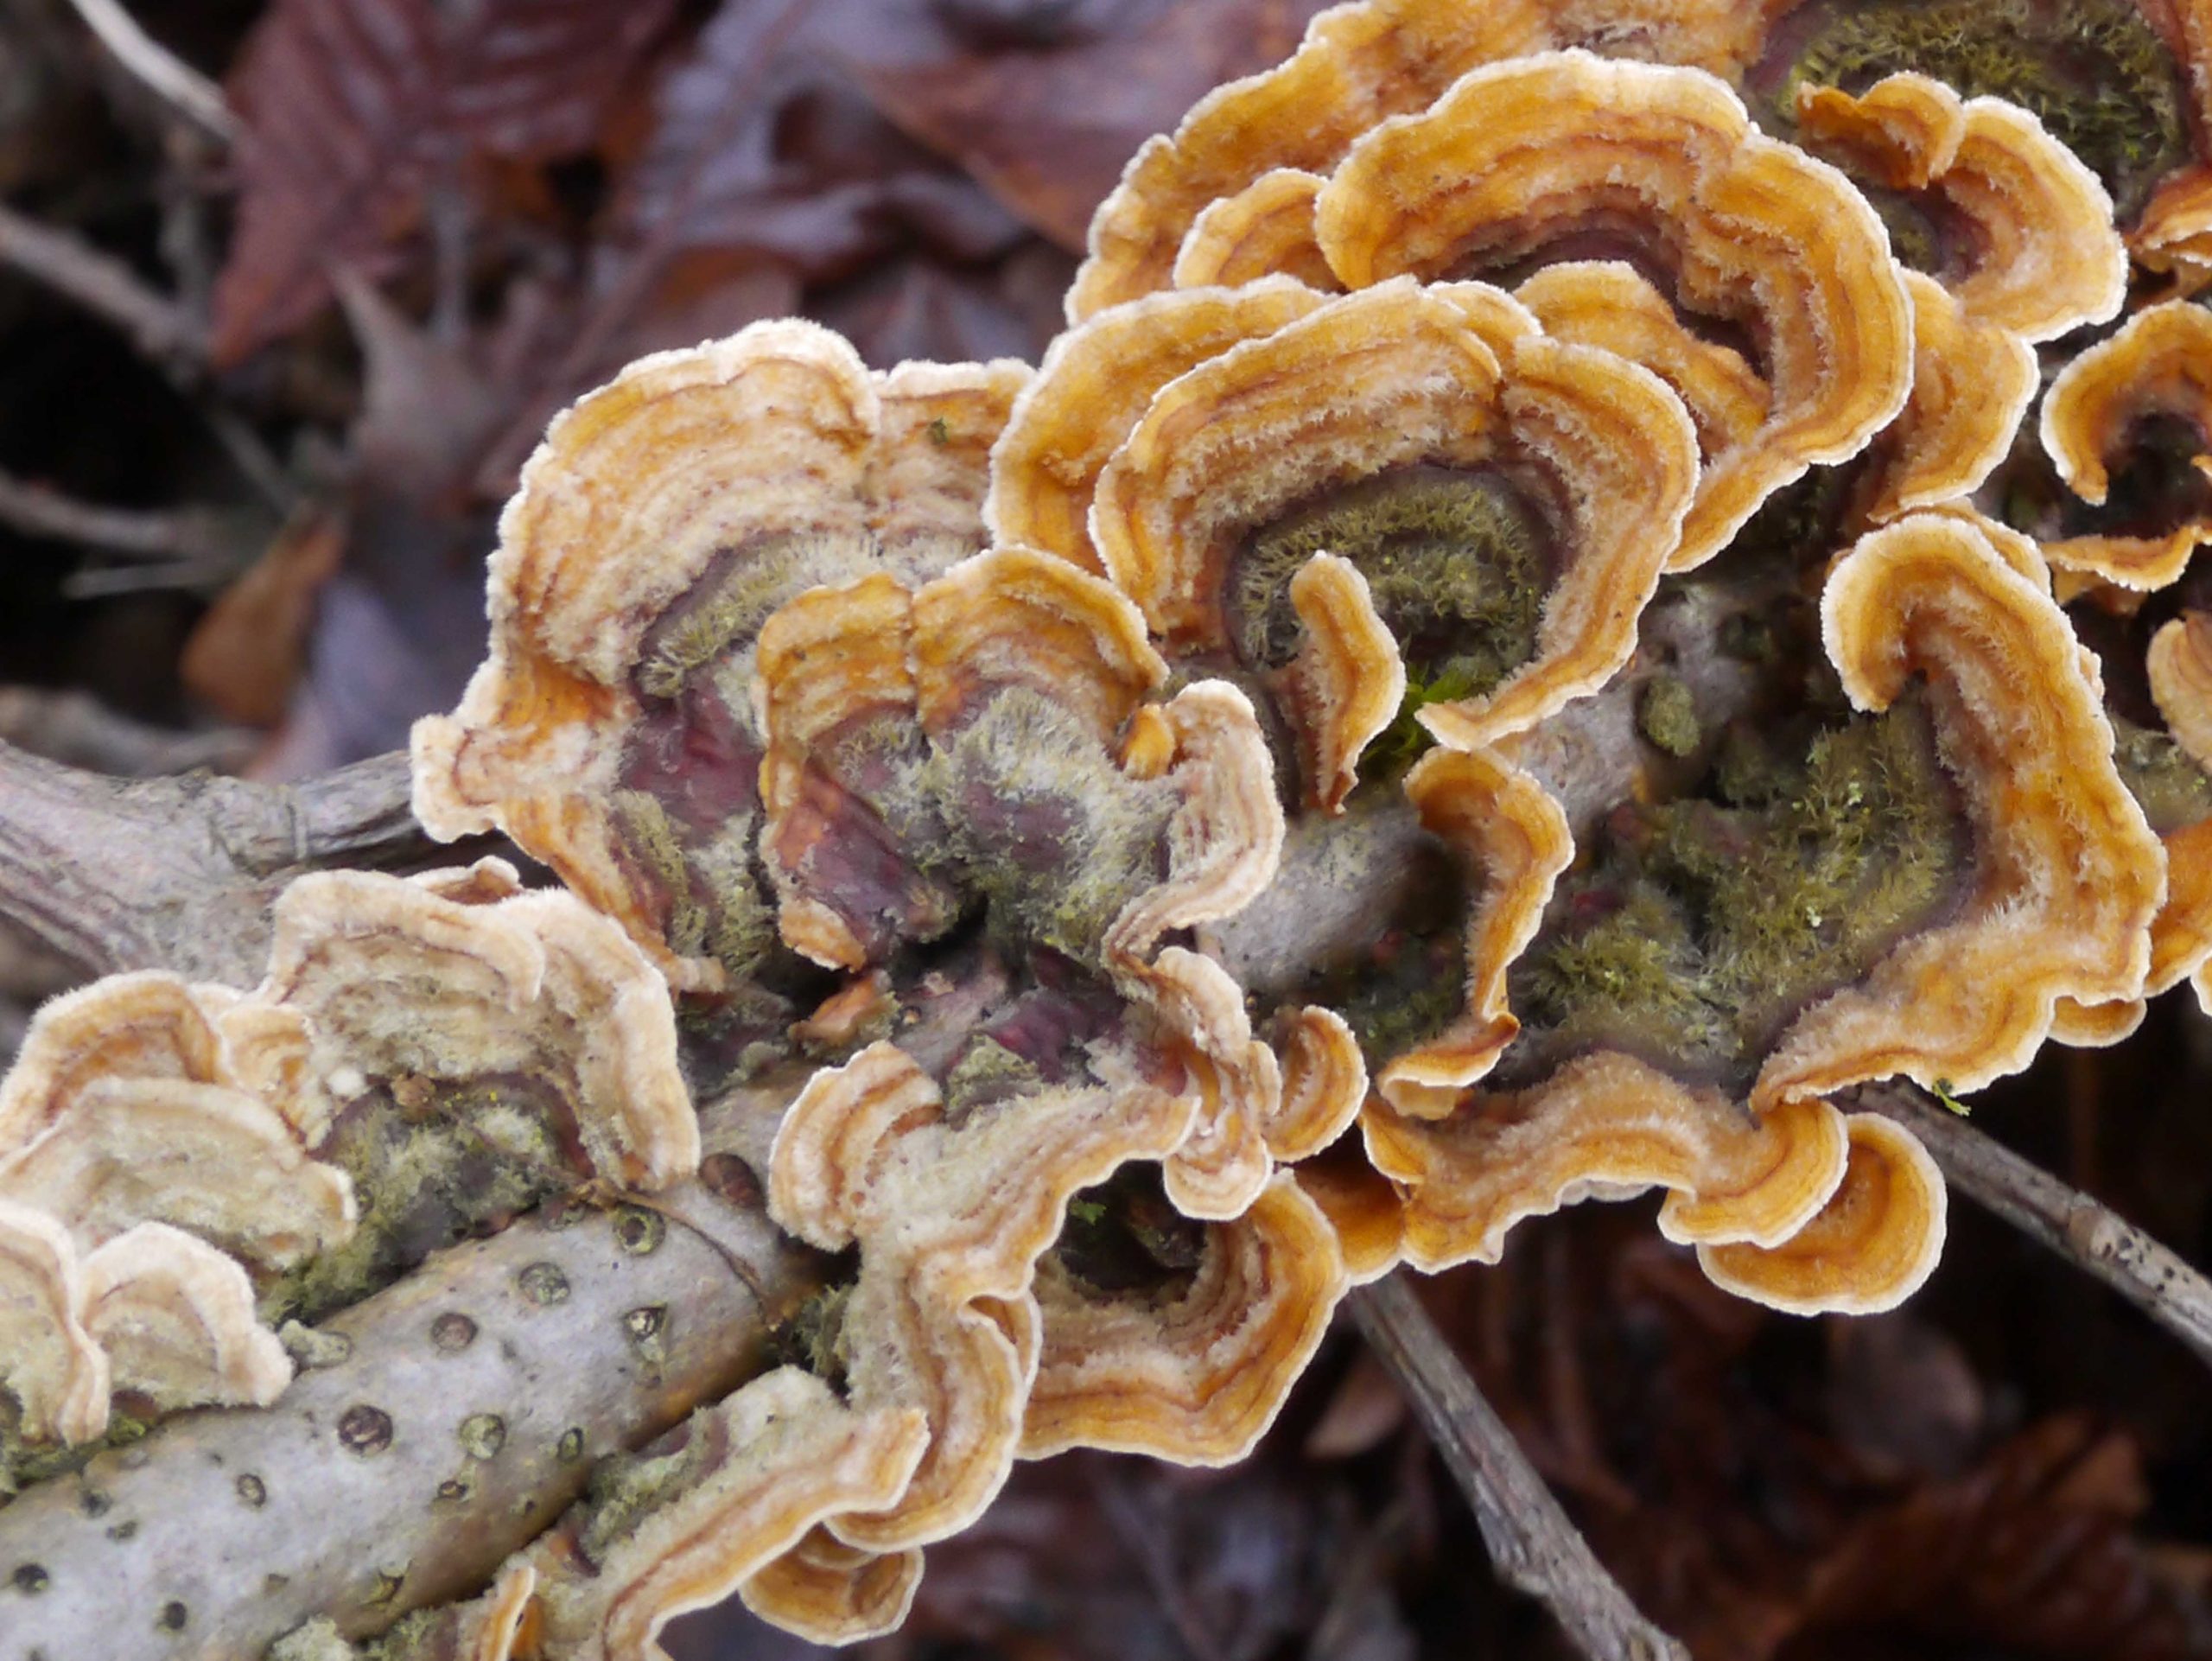 Crust fungus